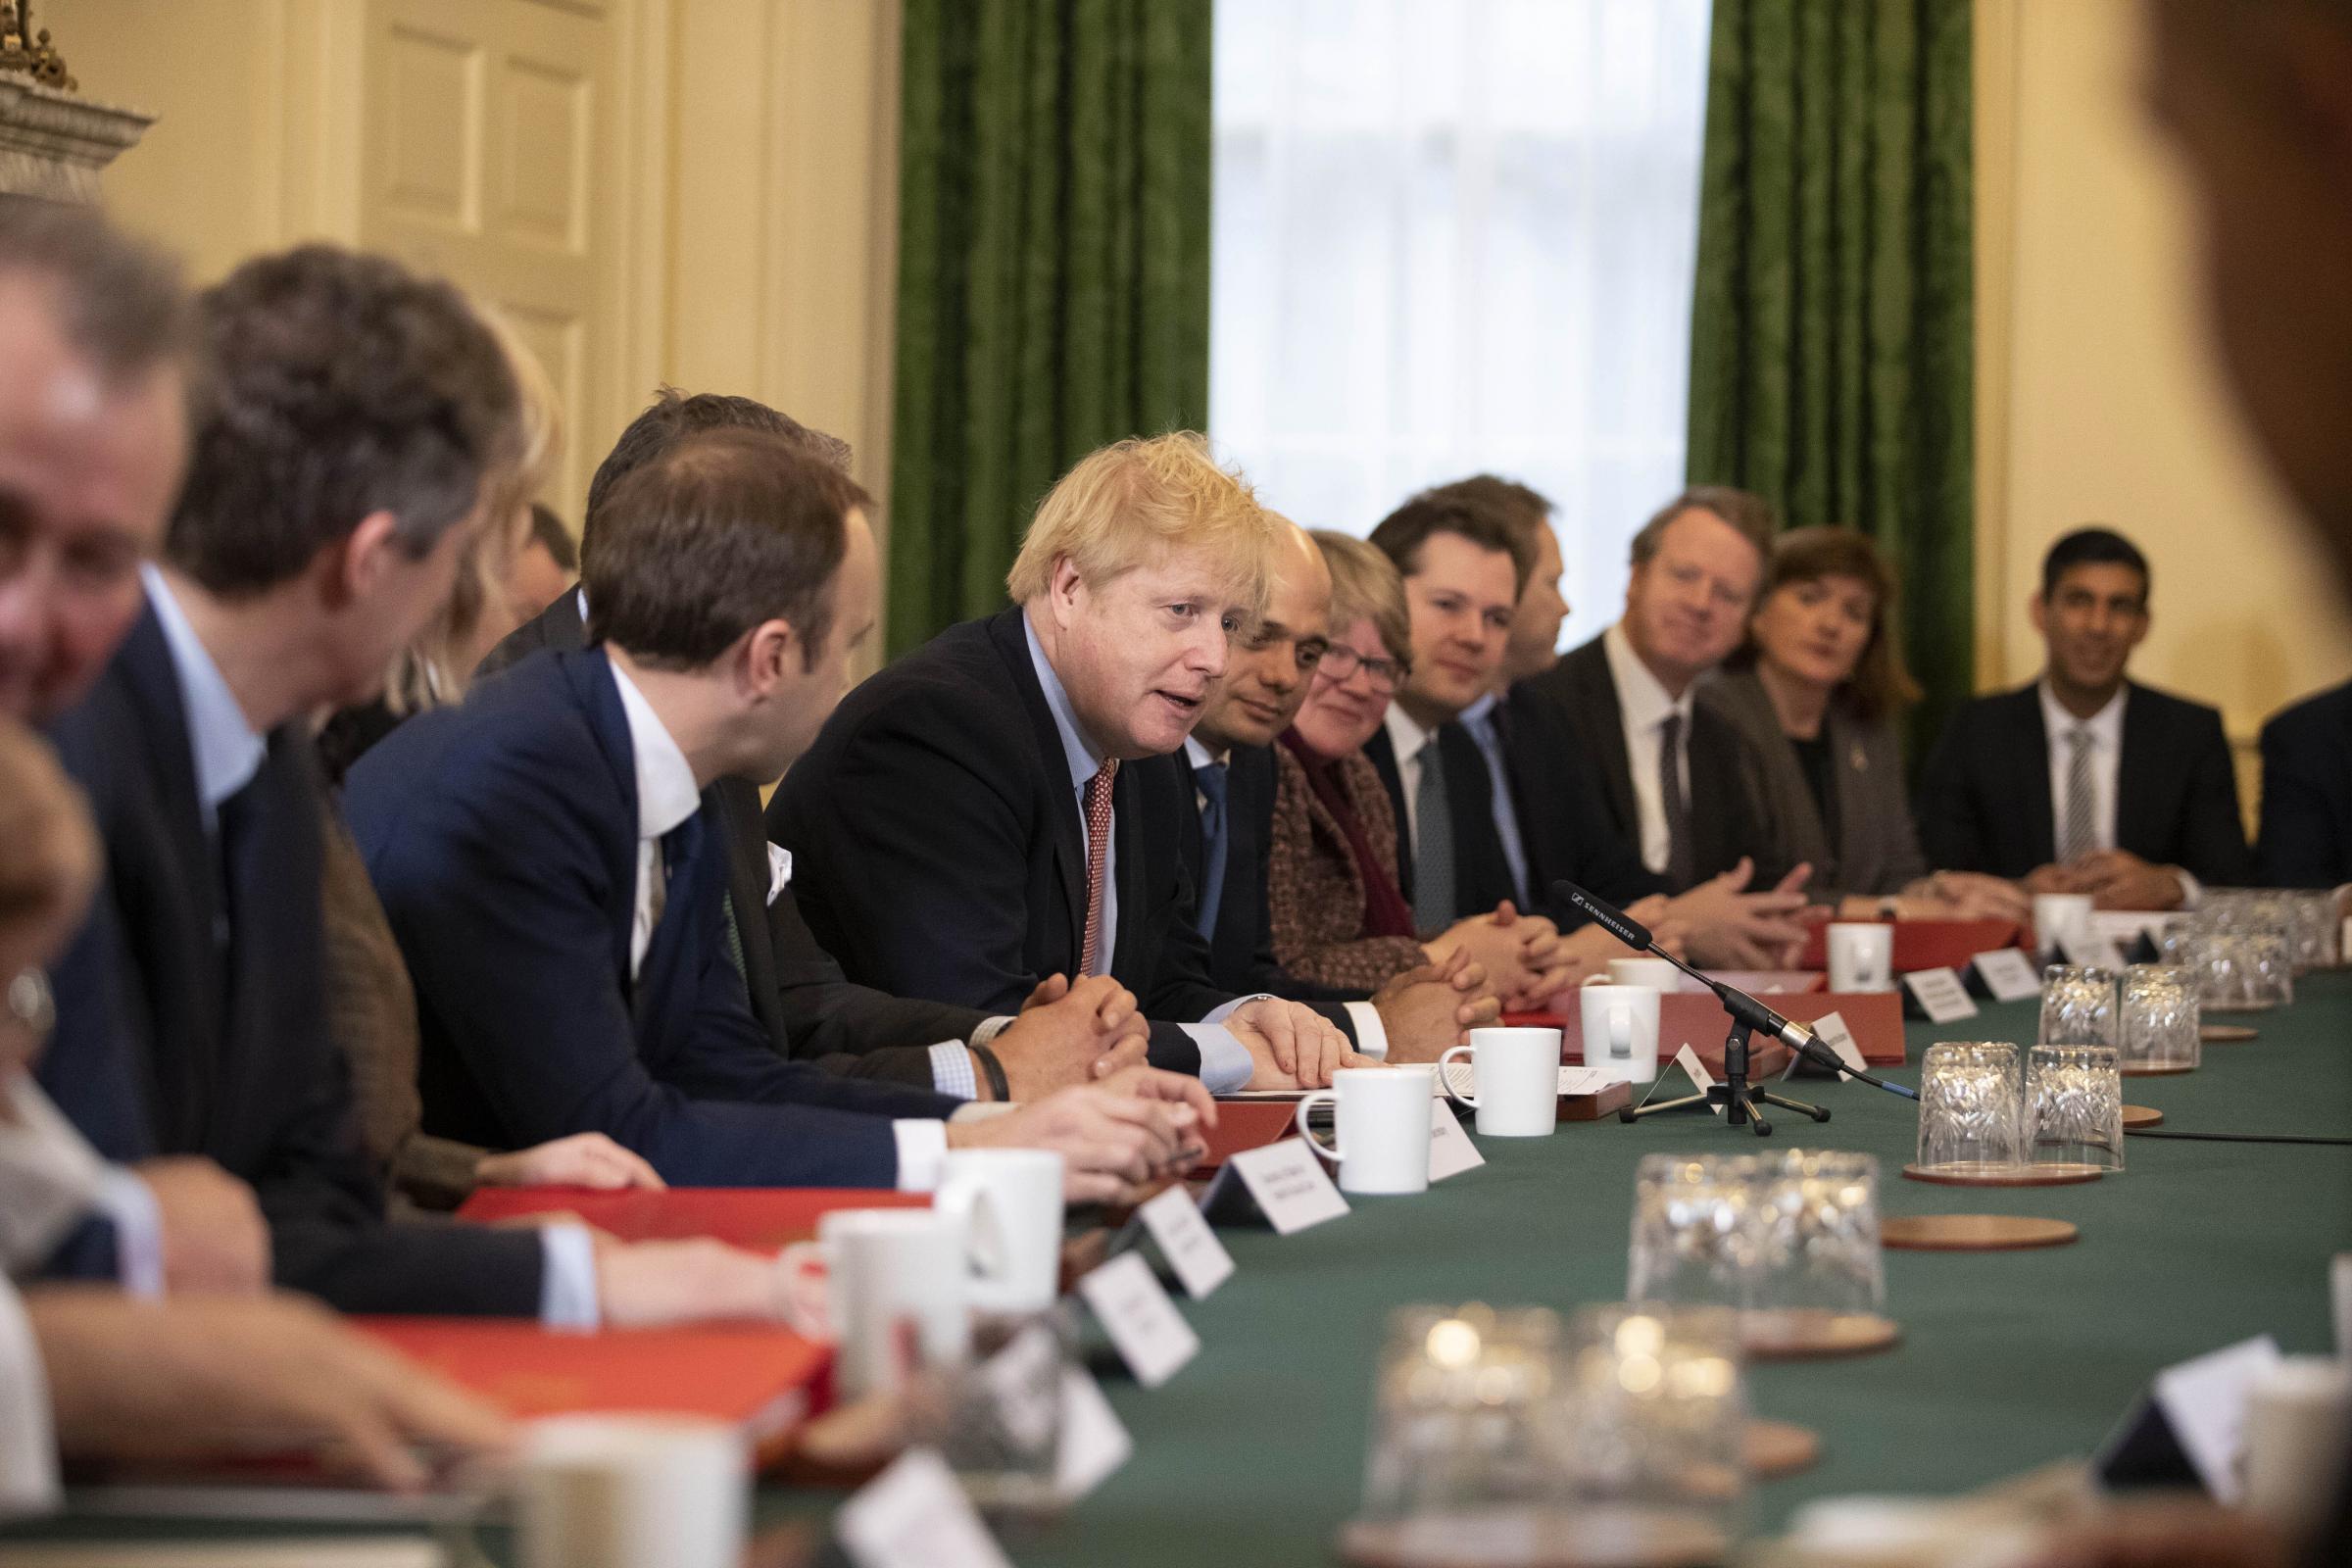 Boris Johnsons carries out Cabinet reshuffle despite resignation